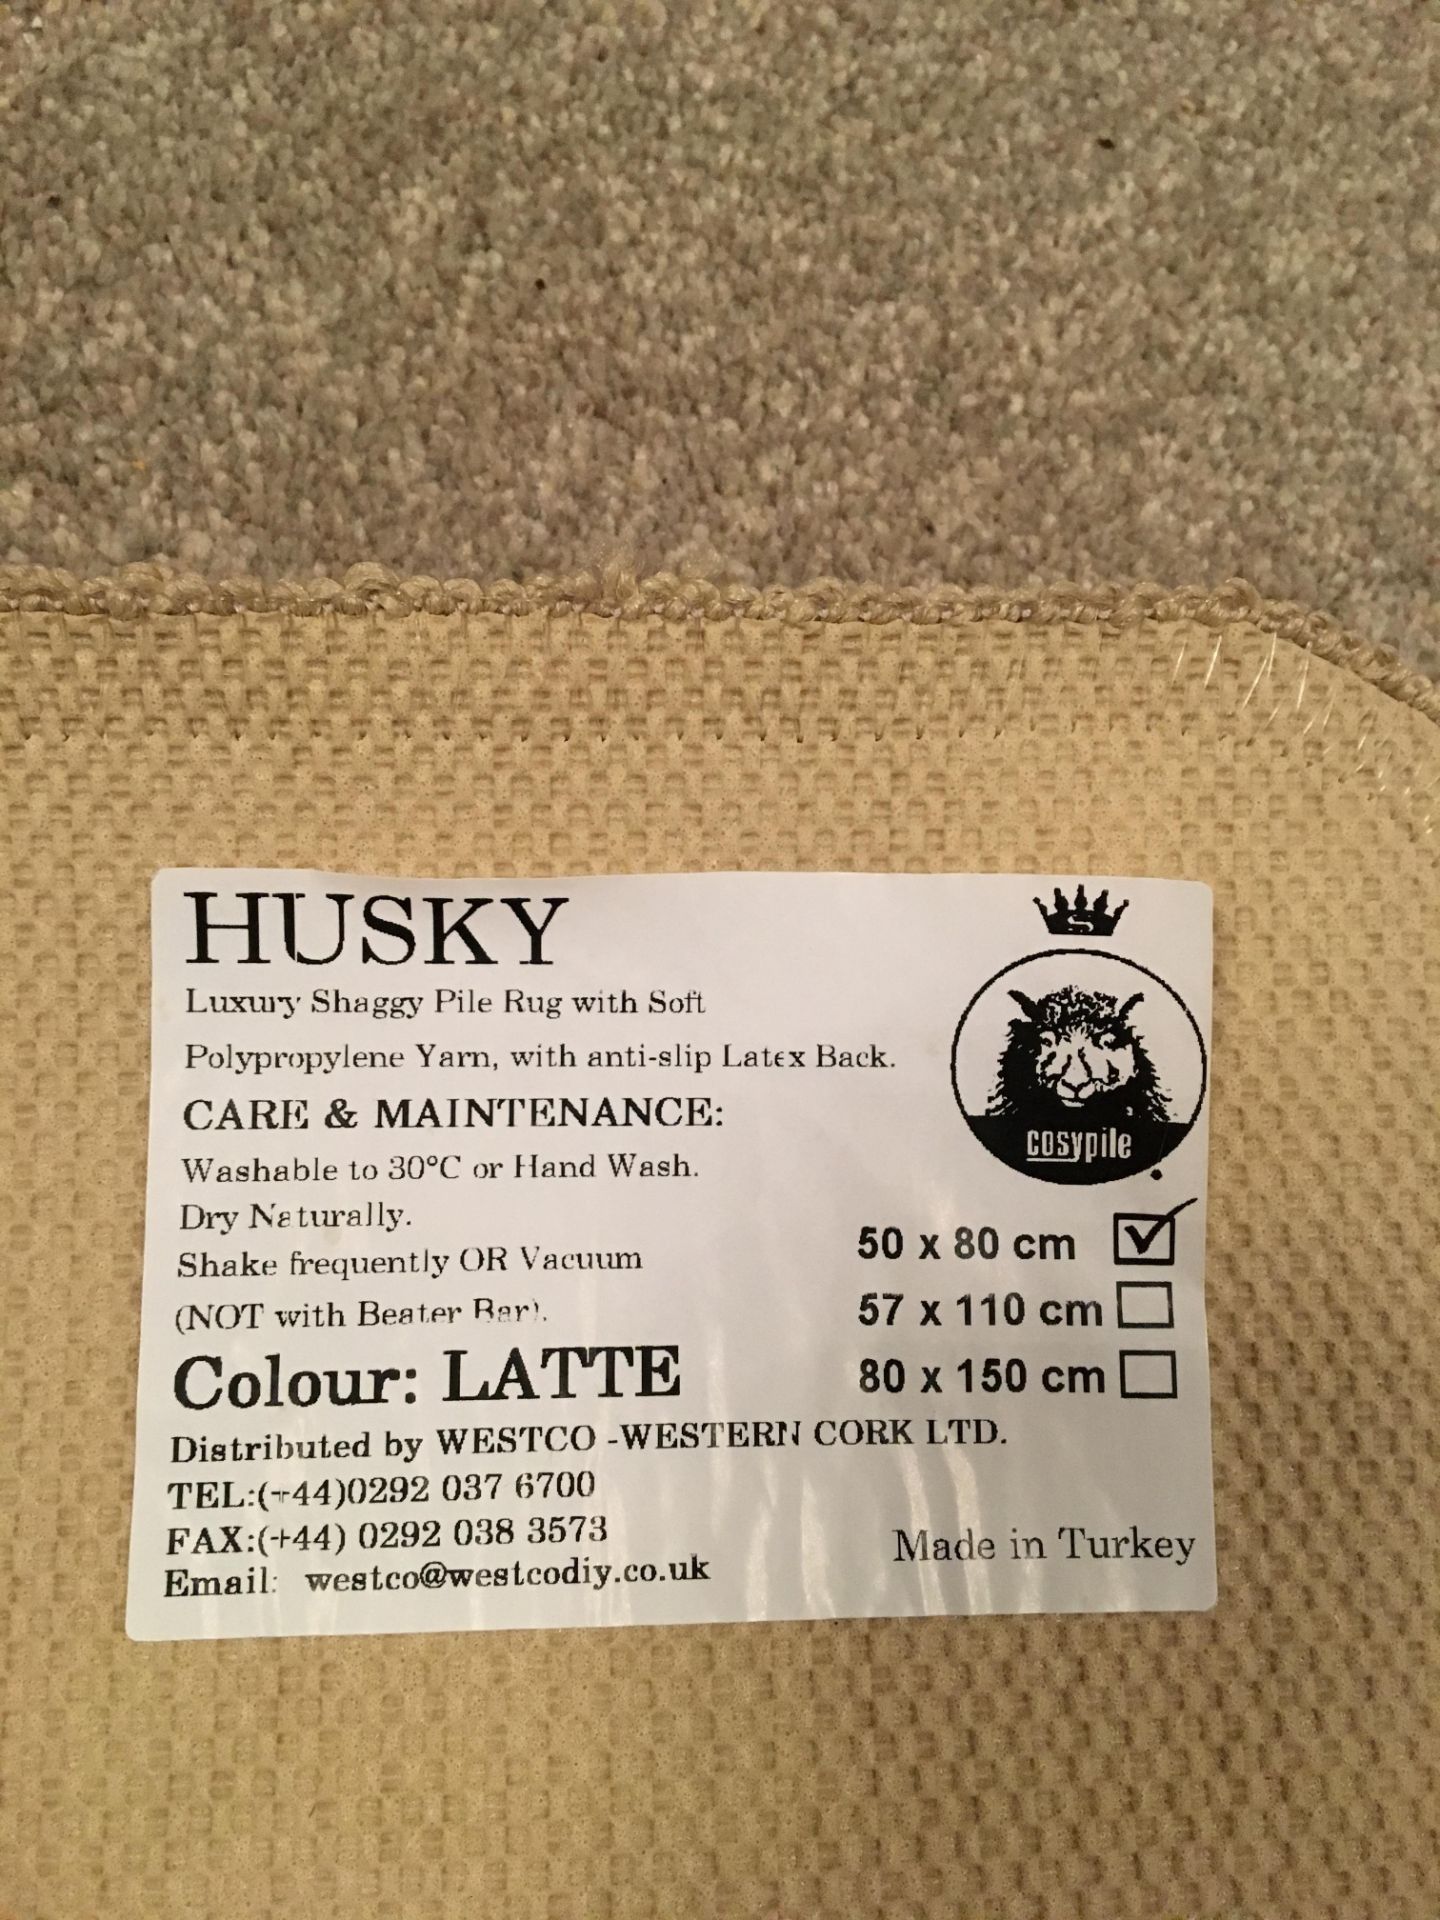 Husky Luxury Shaggy Pile Rug (50cm x 80cm) Qty 30 (1 box) - Image 3 of 3